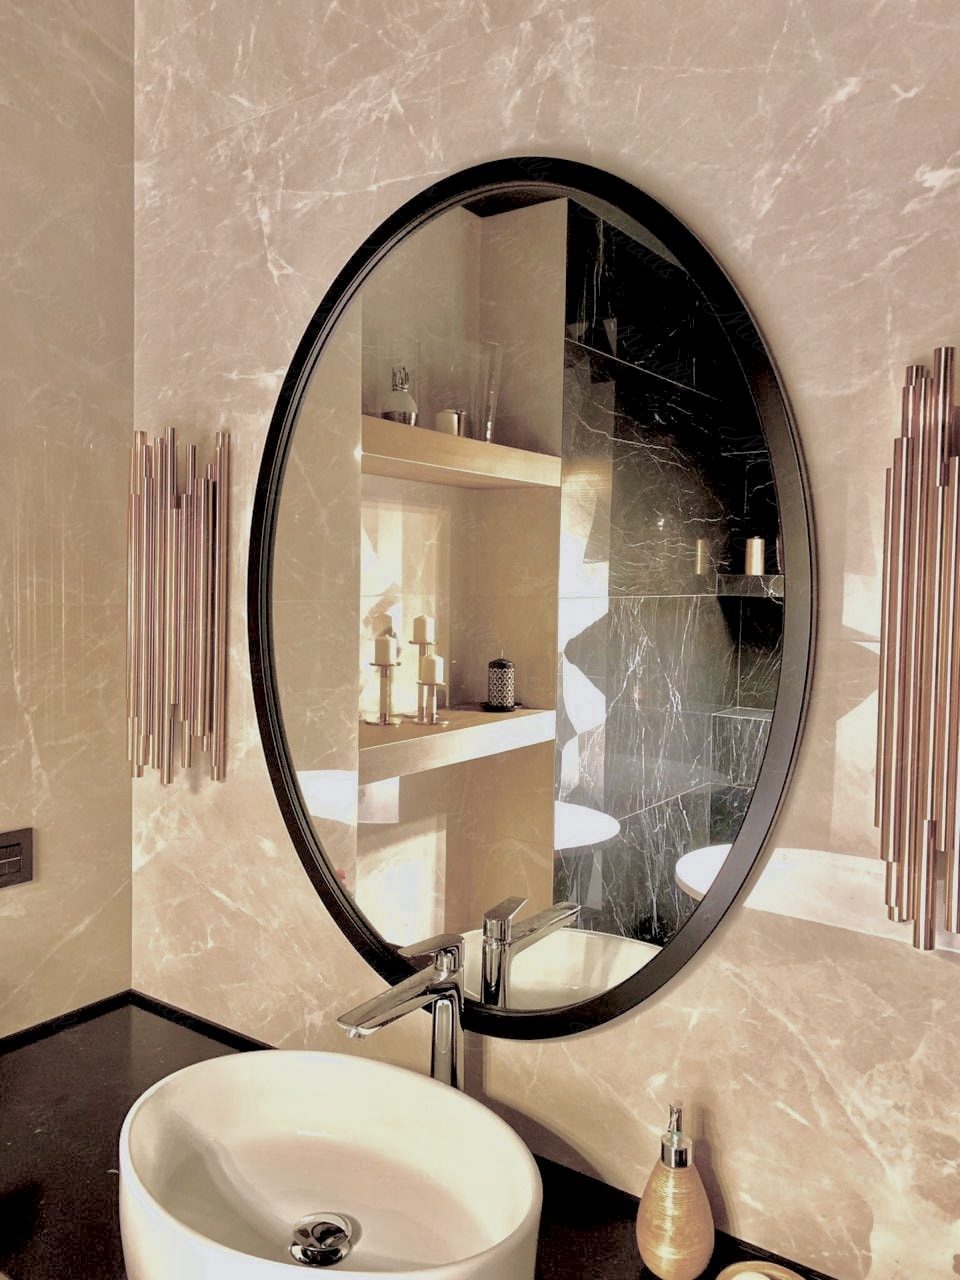 1вин зеркало на сегодня oneofficial31. Зеркало l’Avenir LM-47 овальное. Зеркало miralls. Зеркало для ванной комнаты. Круглое зеркало в ванную.